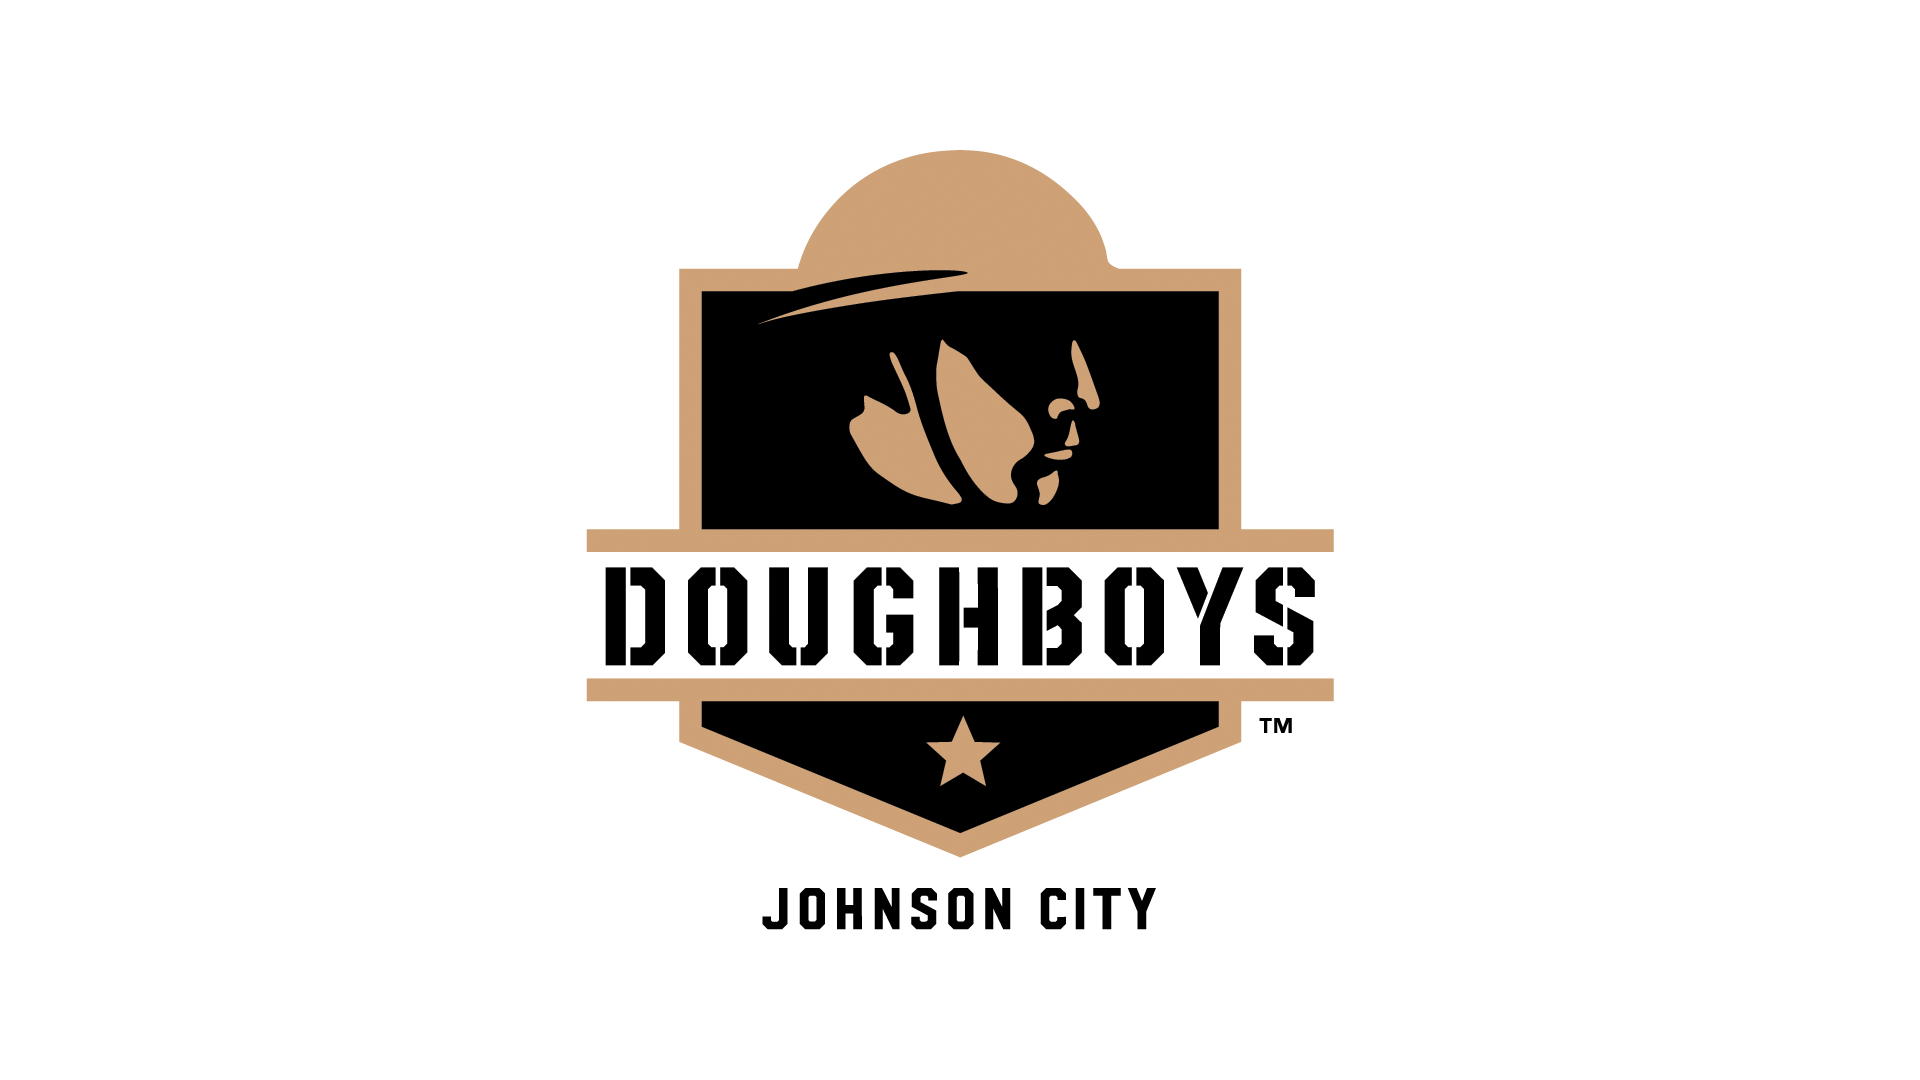 DoughboysPRIMARY